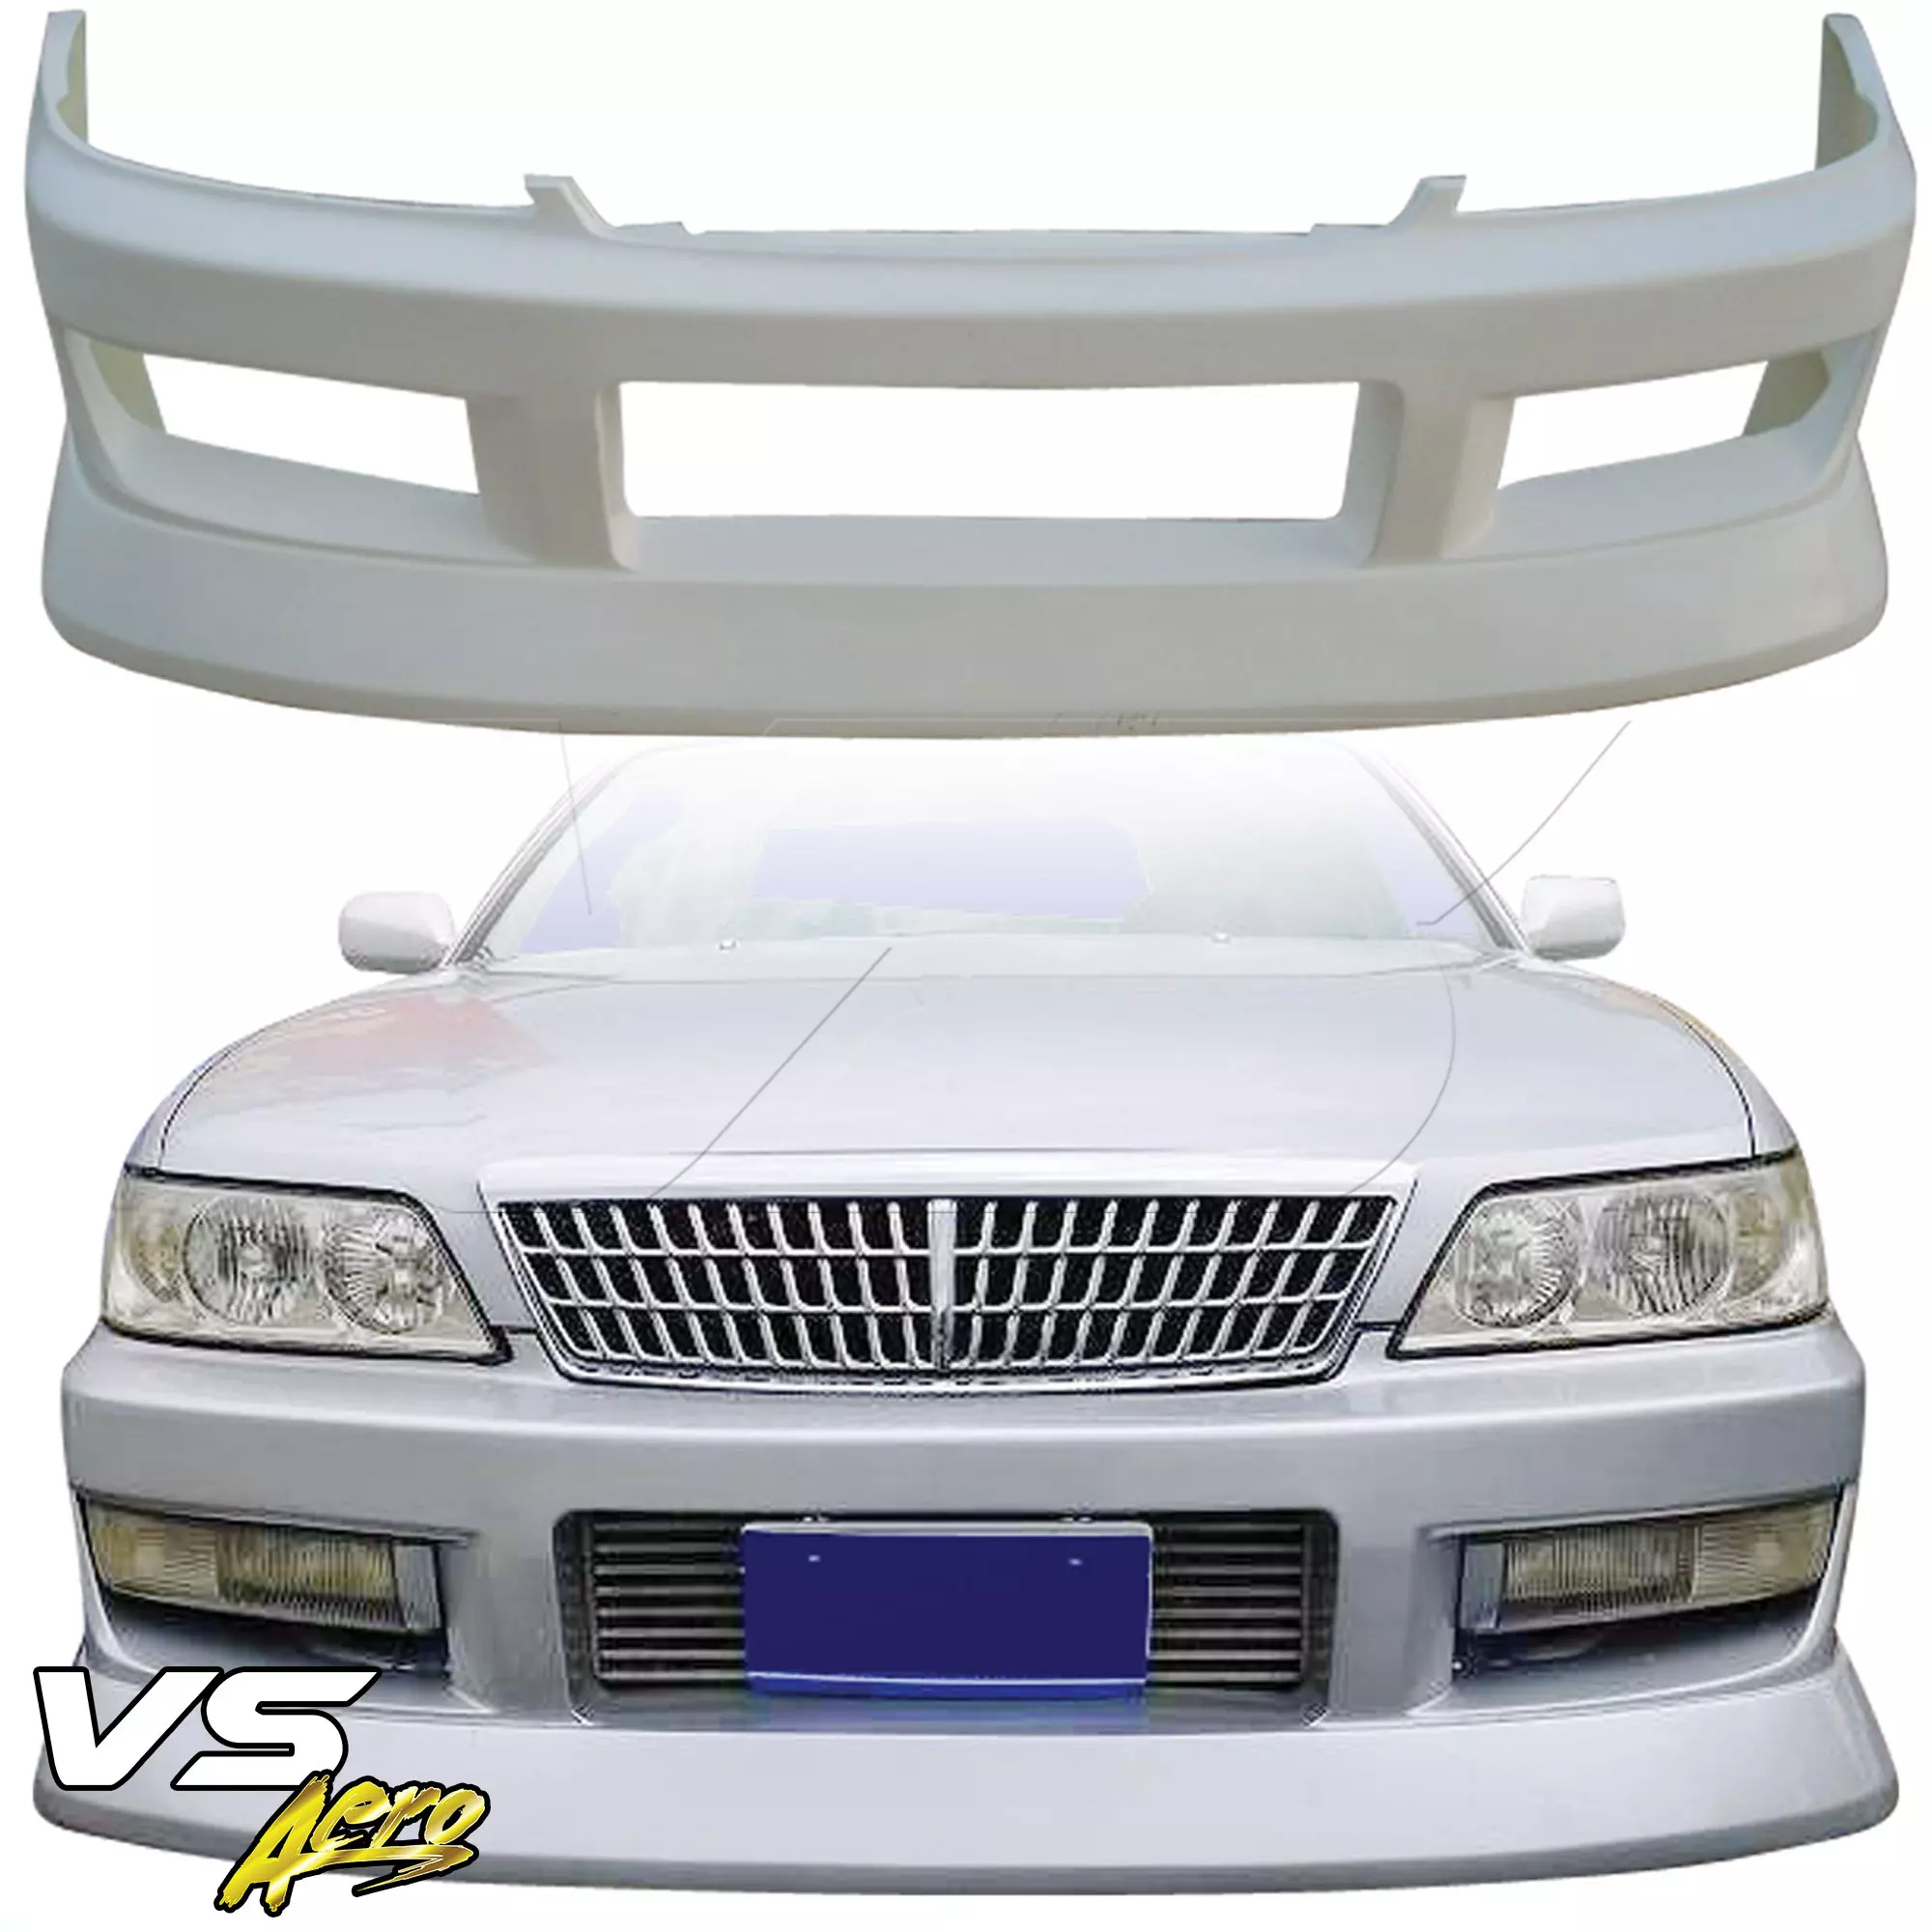 VSaero FRP FKON Front Bumper (early model) > Nissan Laurel C35 1998-2002 - Image 5